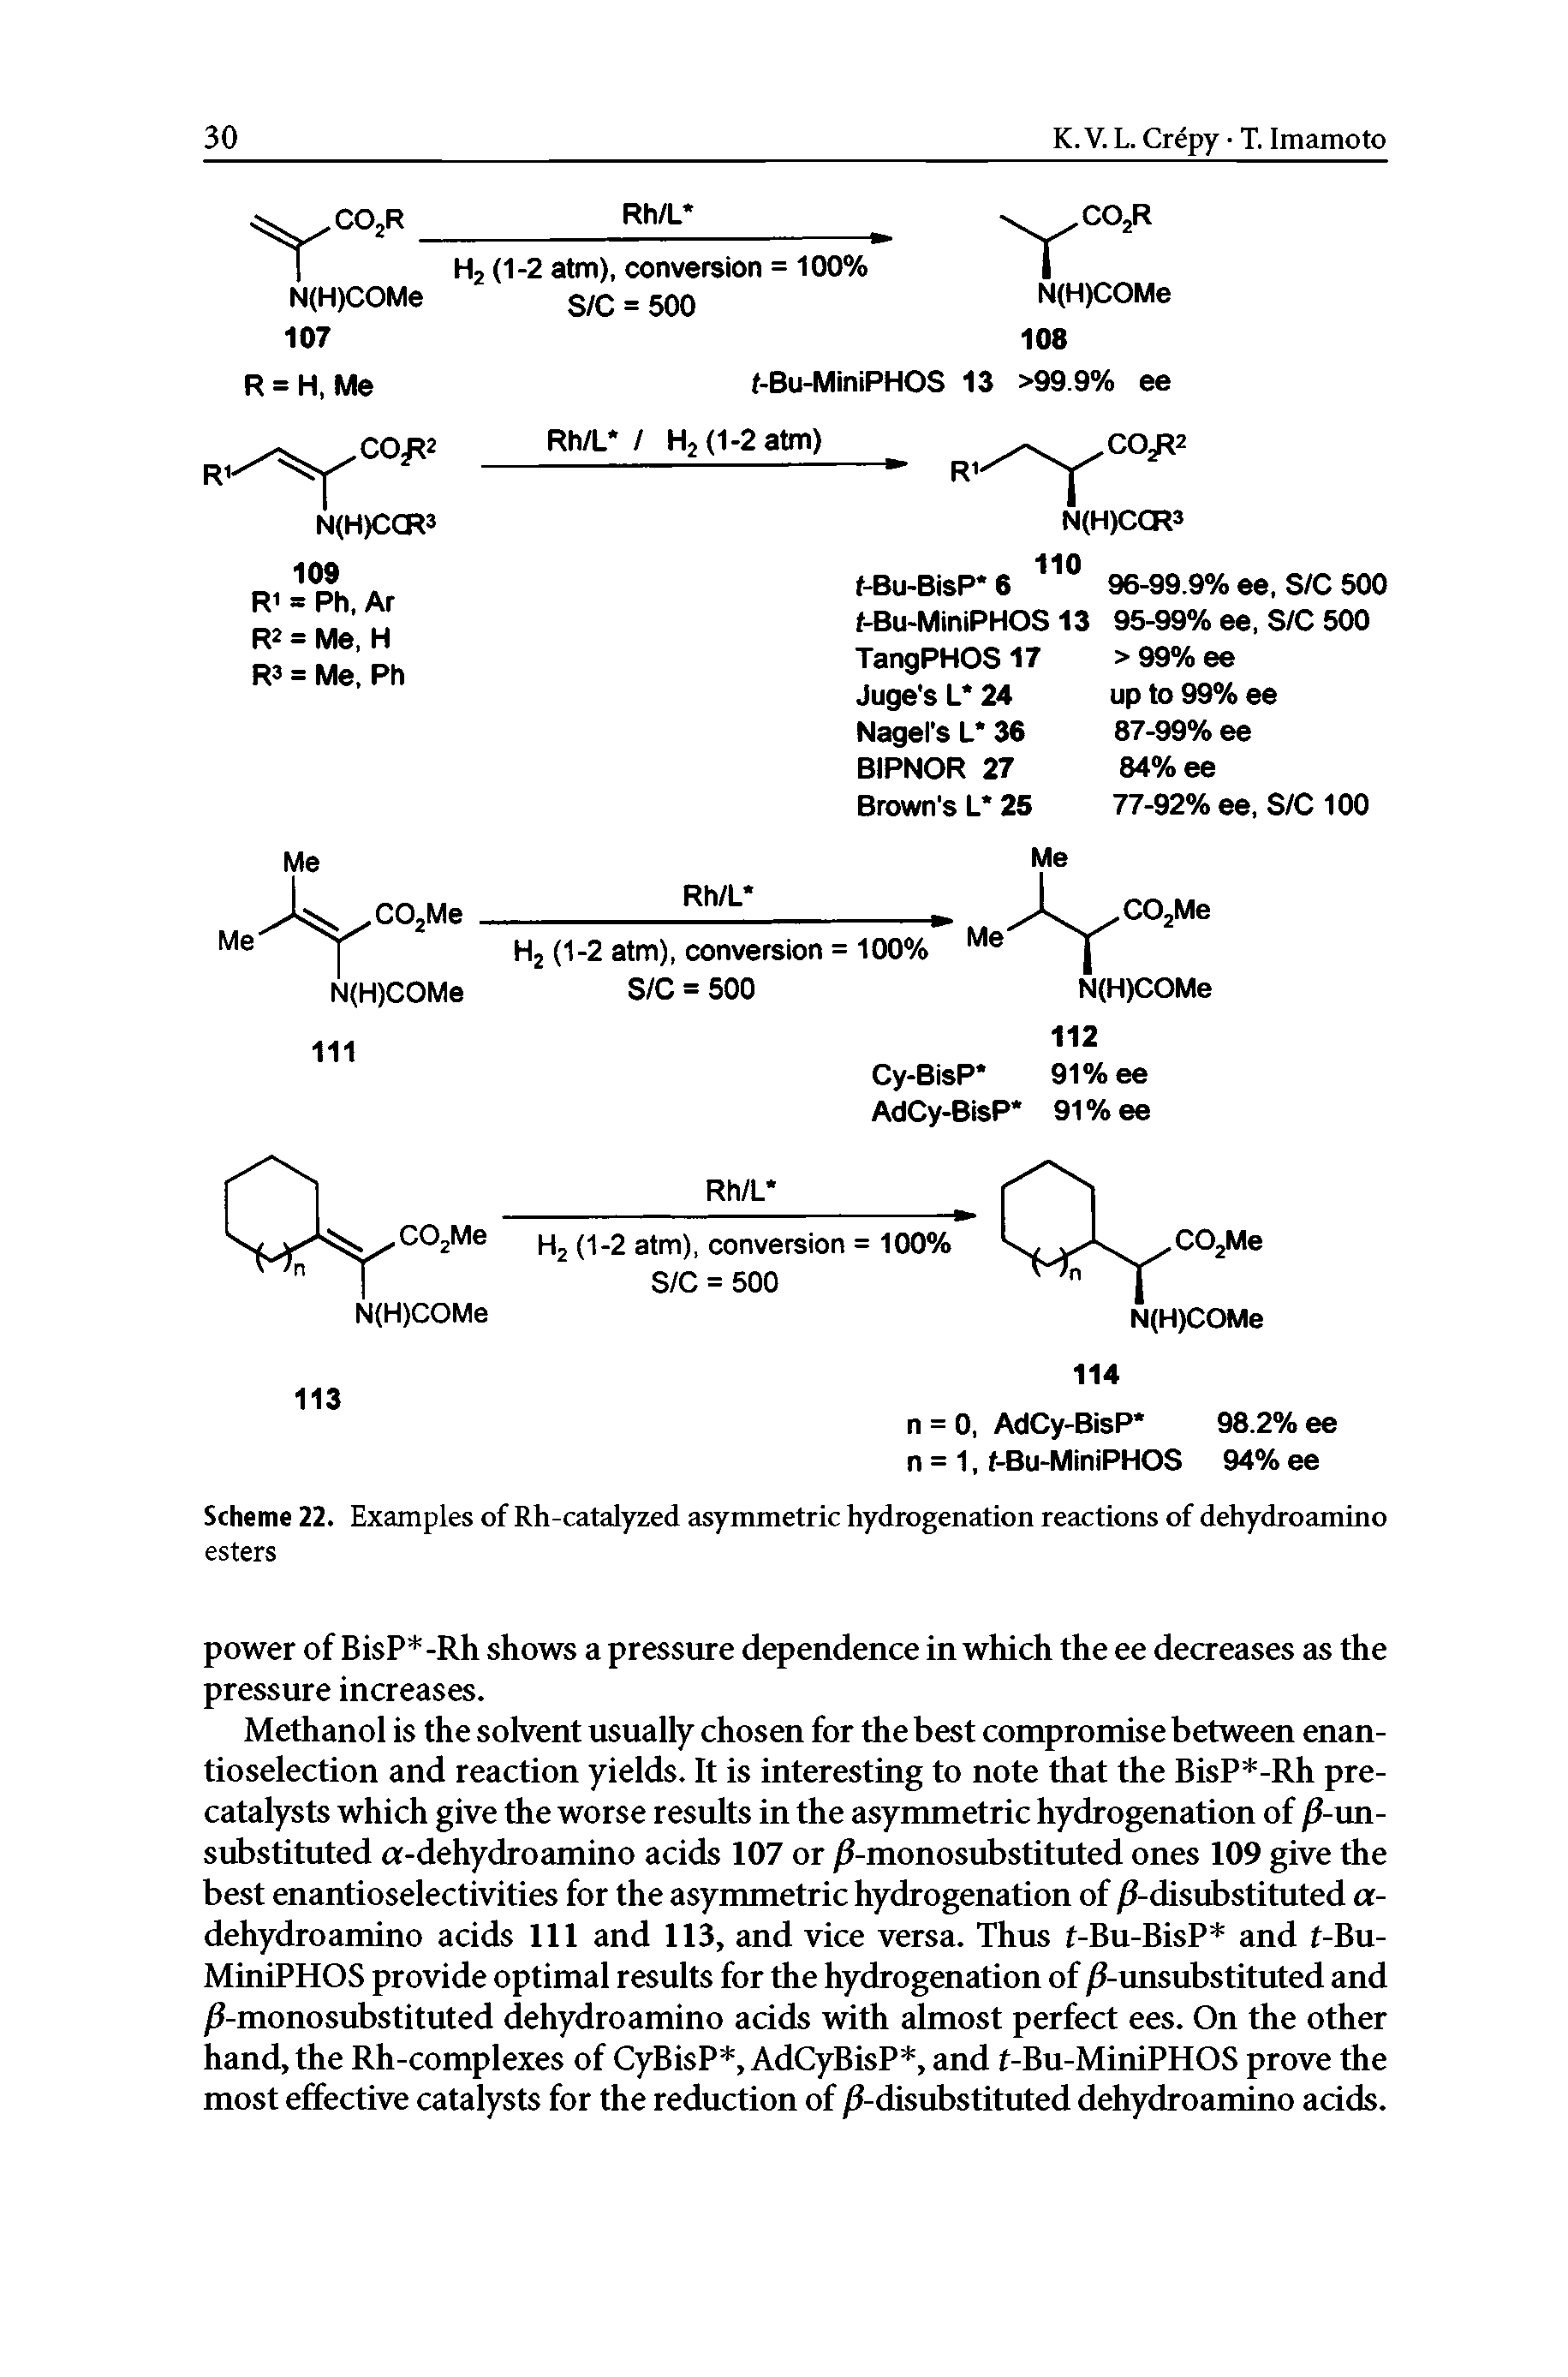 Scheme 22. Examples of Rh-catalyzed asymmetric hydrogenation reactions of dehydroammo esters...